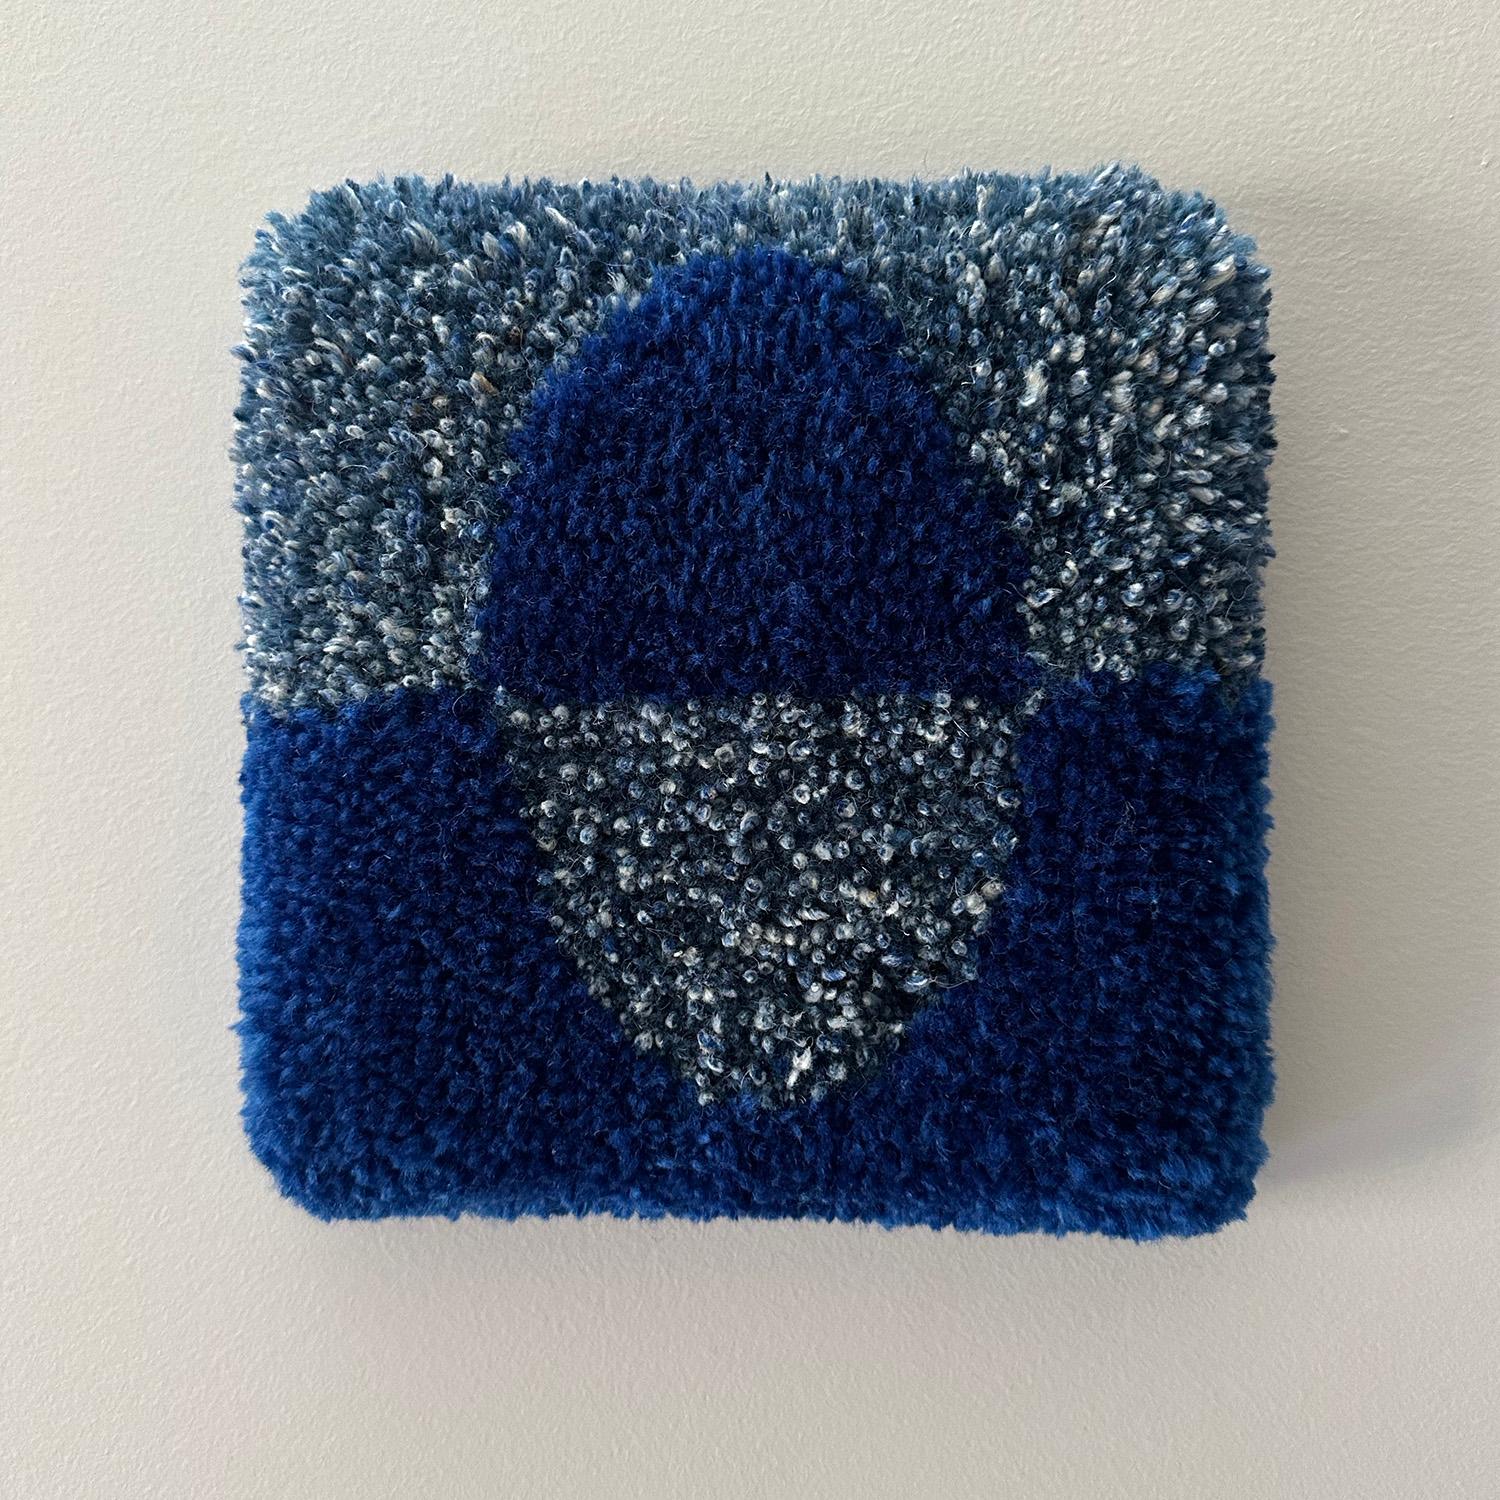 Fog, texture, textile, pattern, blue, symmetrical  - Sculpture by Ana Maria Farina